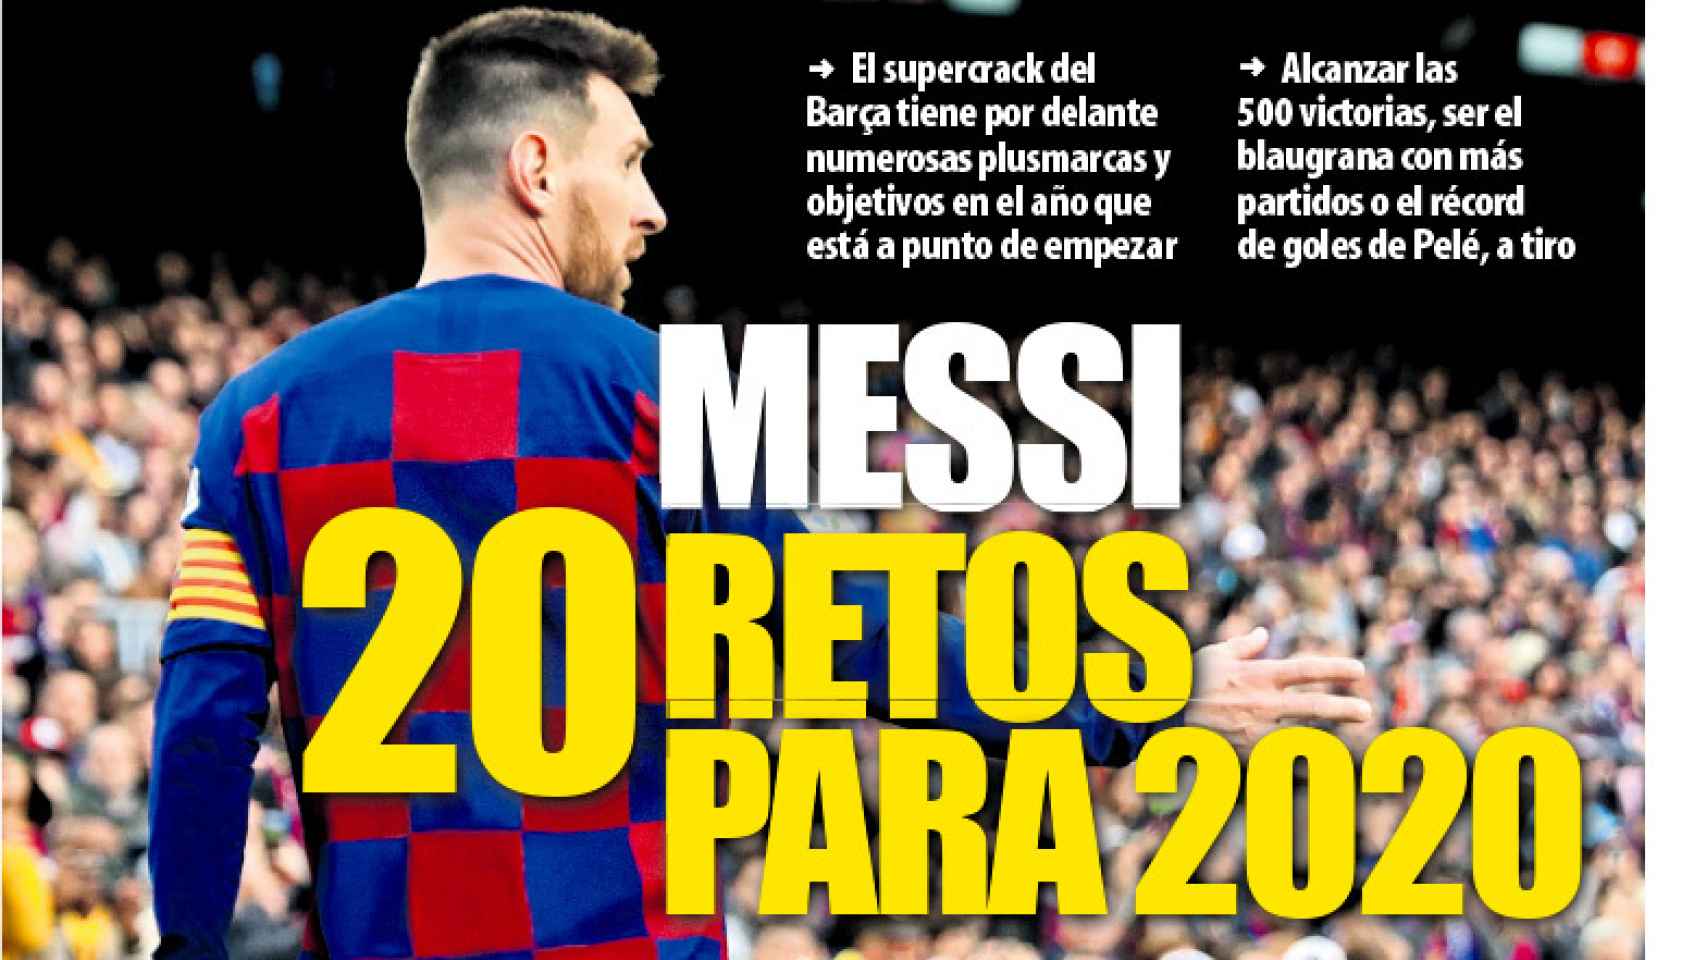 La portada del diario Mundo Deportivo (31/12/2019)1706 x 960